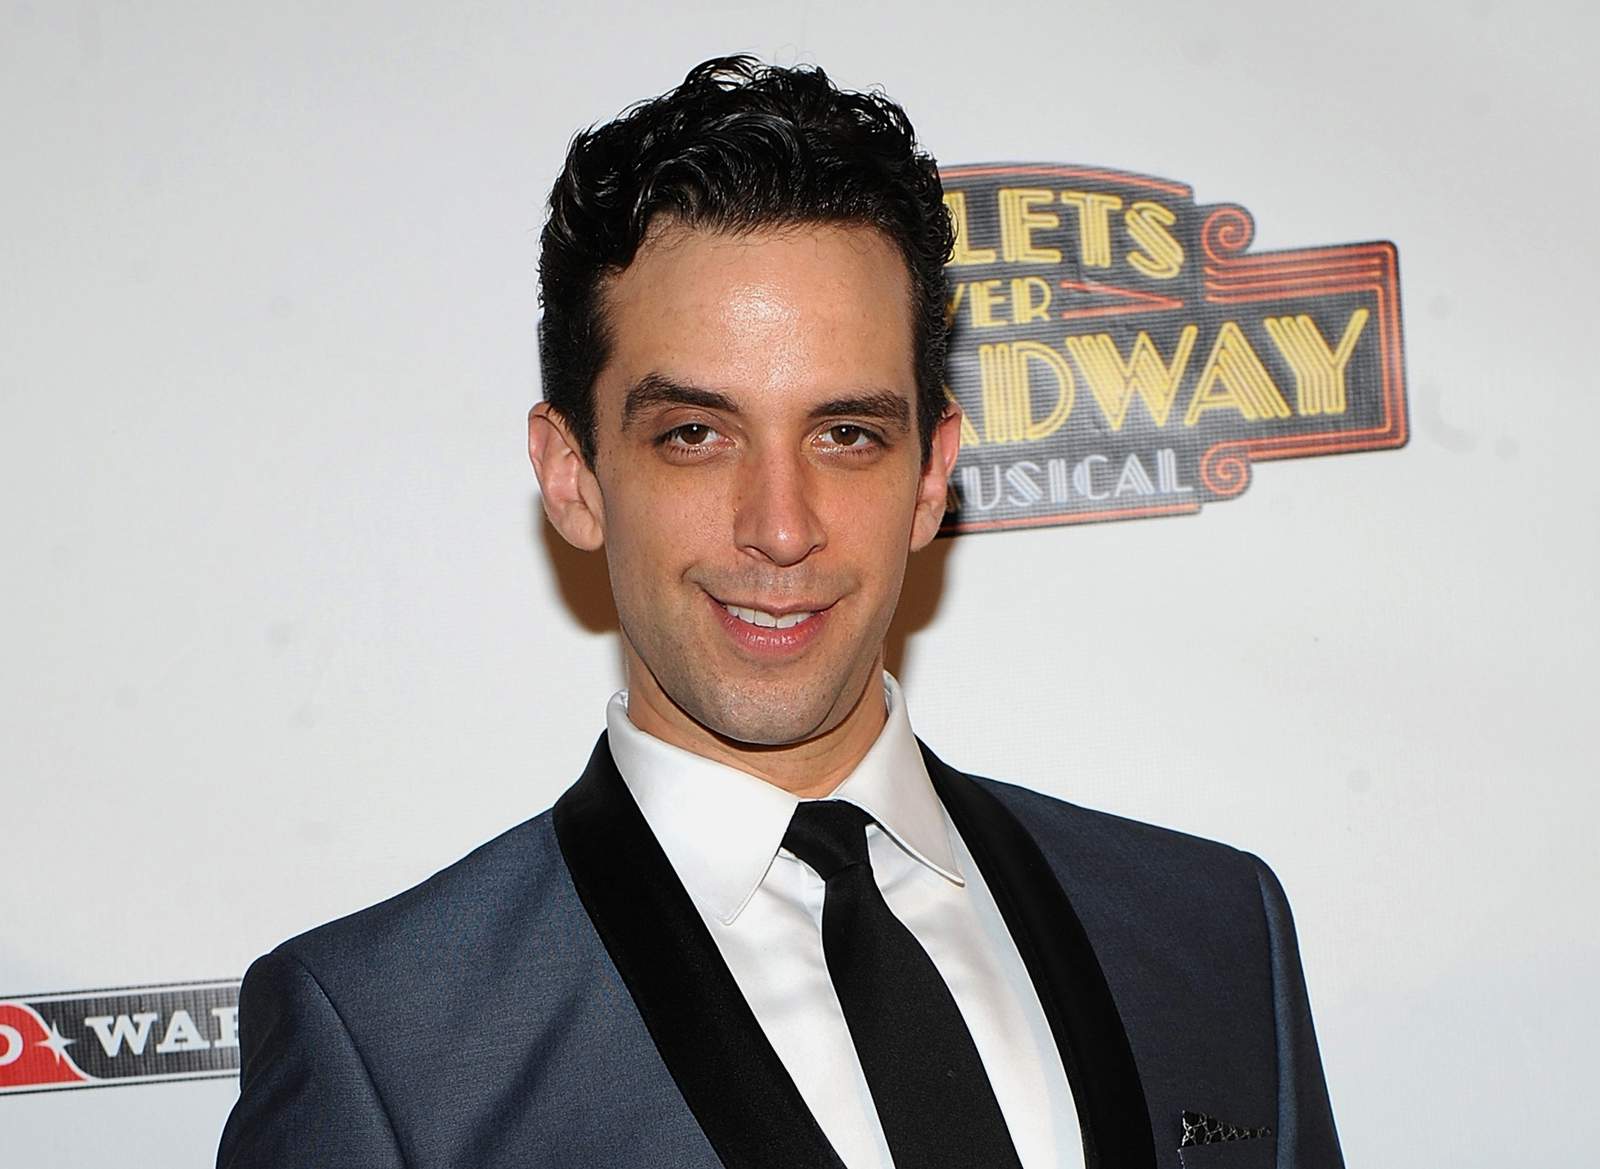 Broadway star Nick Cordero has leg amputation due to virus